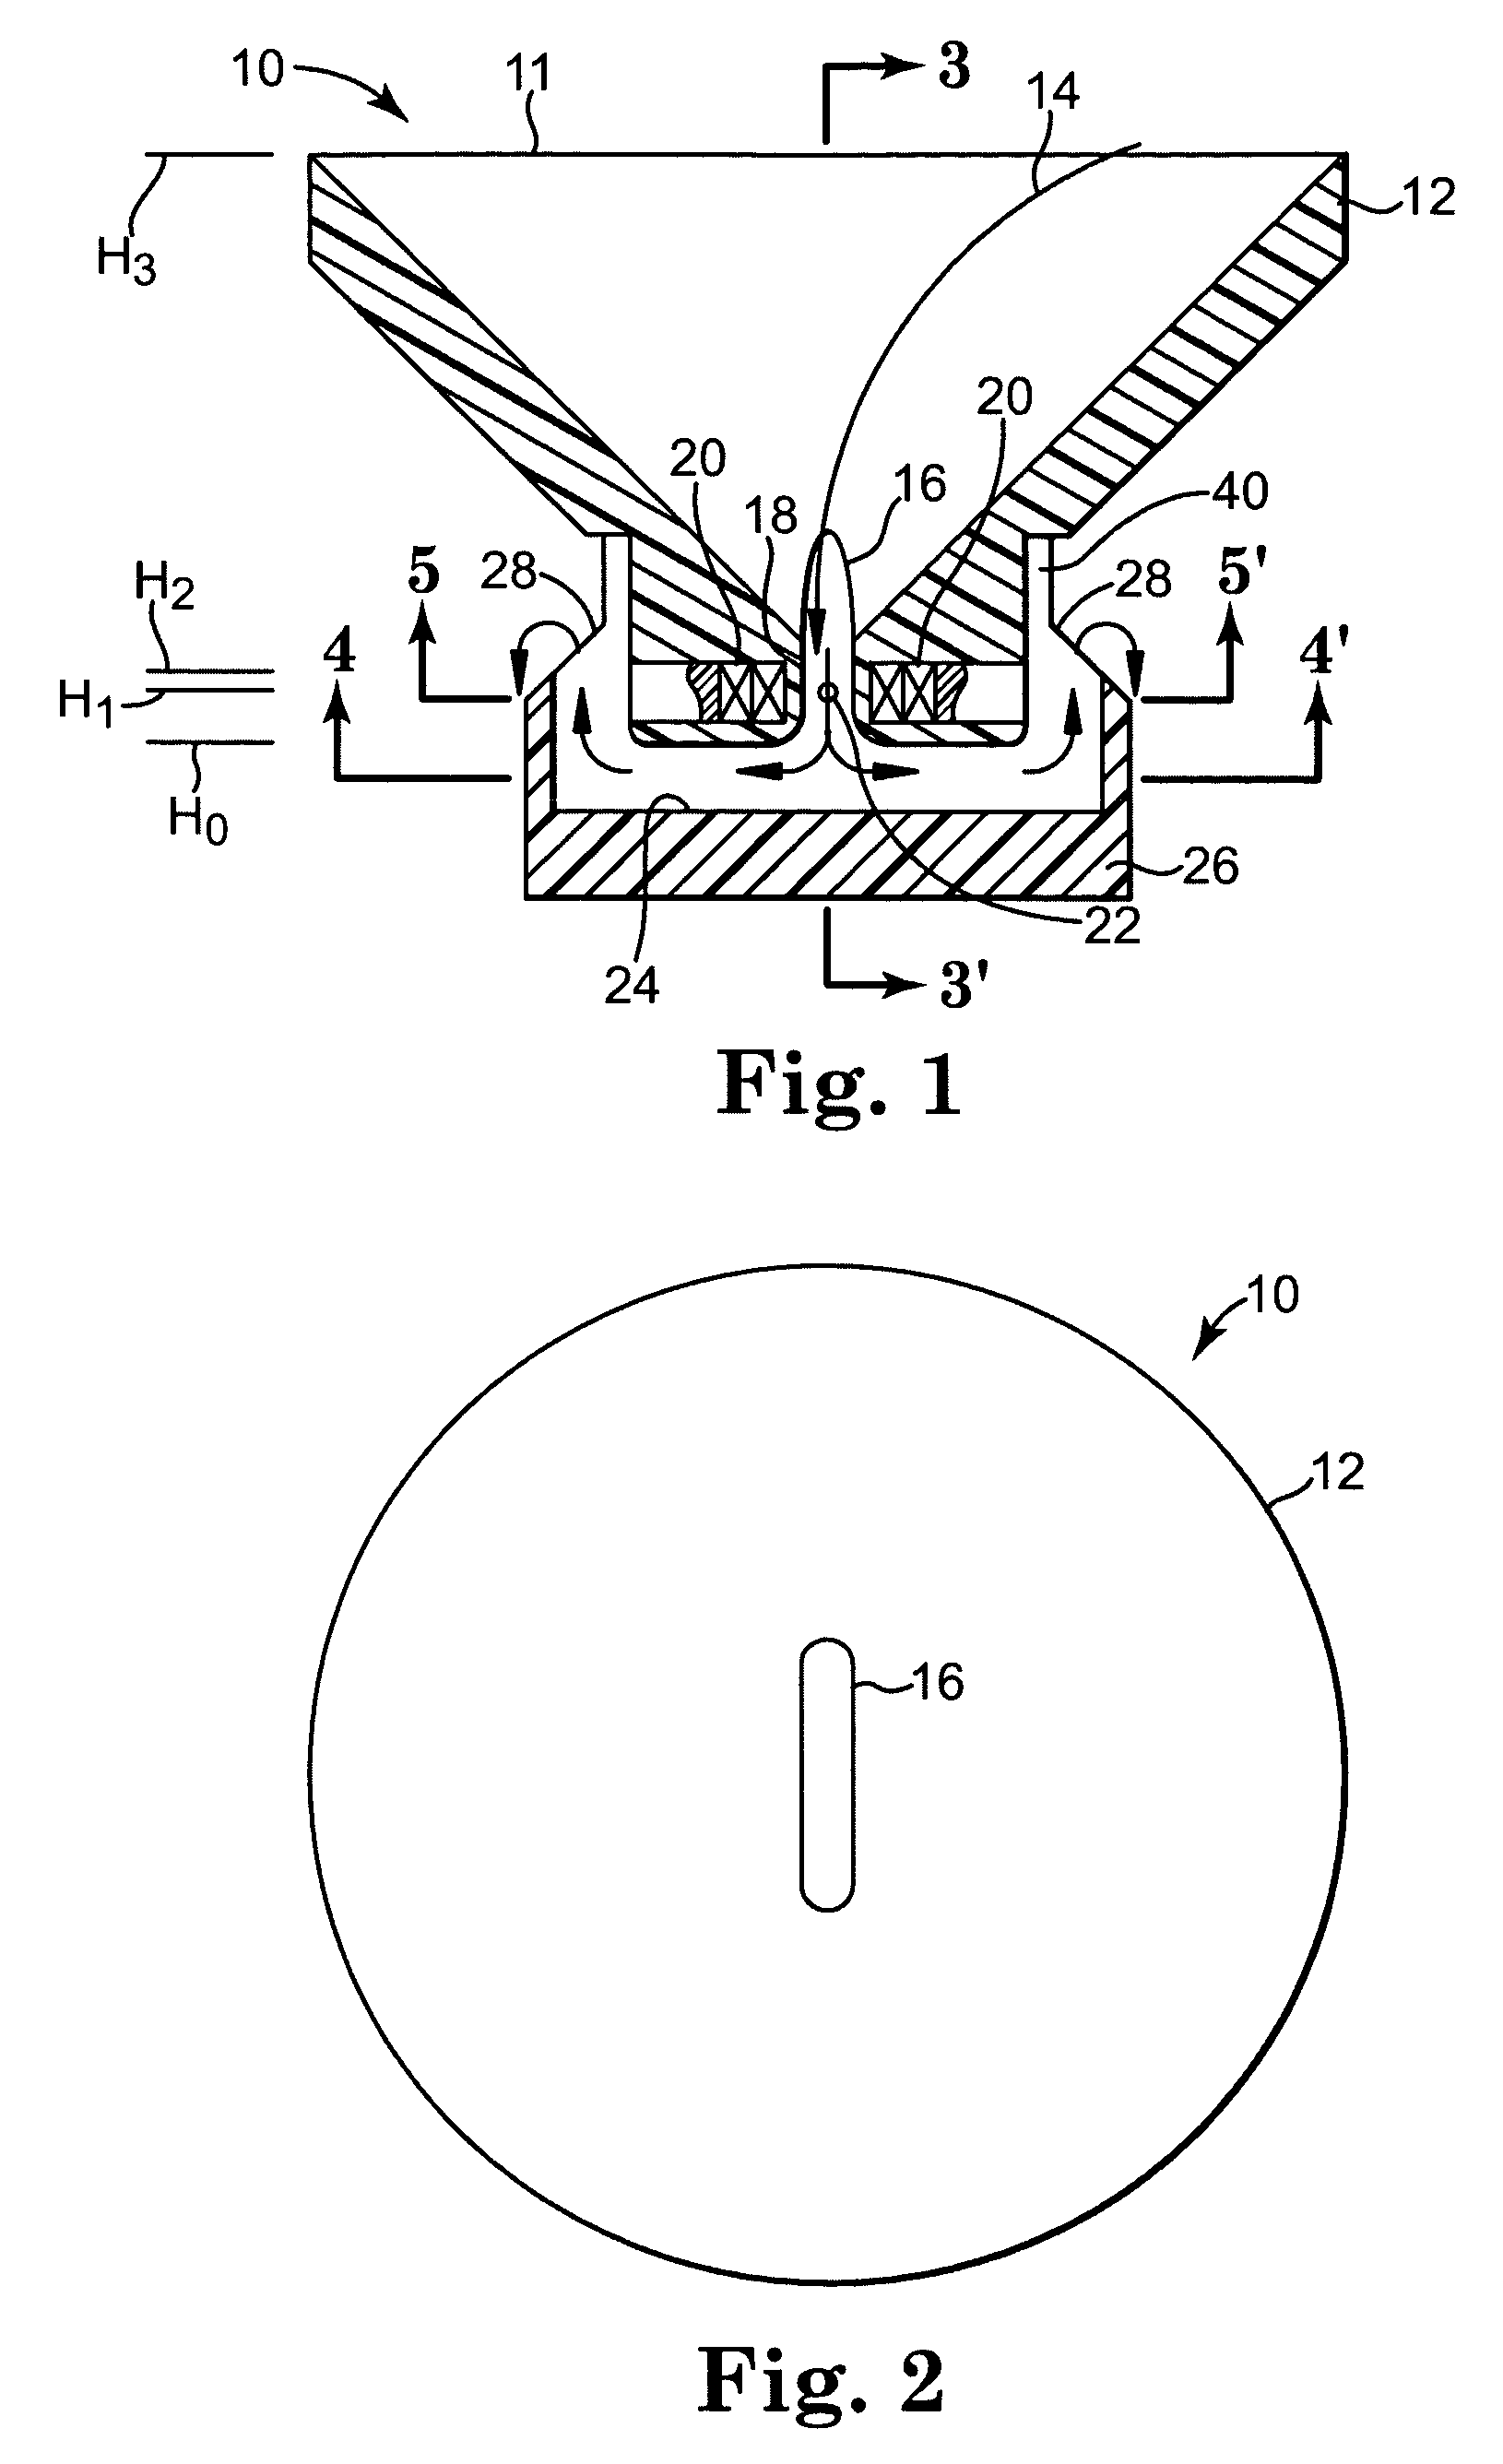 Open circuit gravity-assisted uroflowmeter